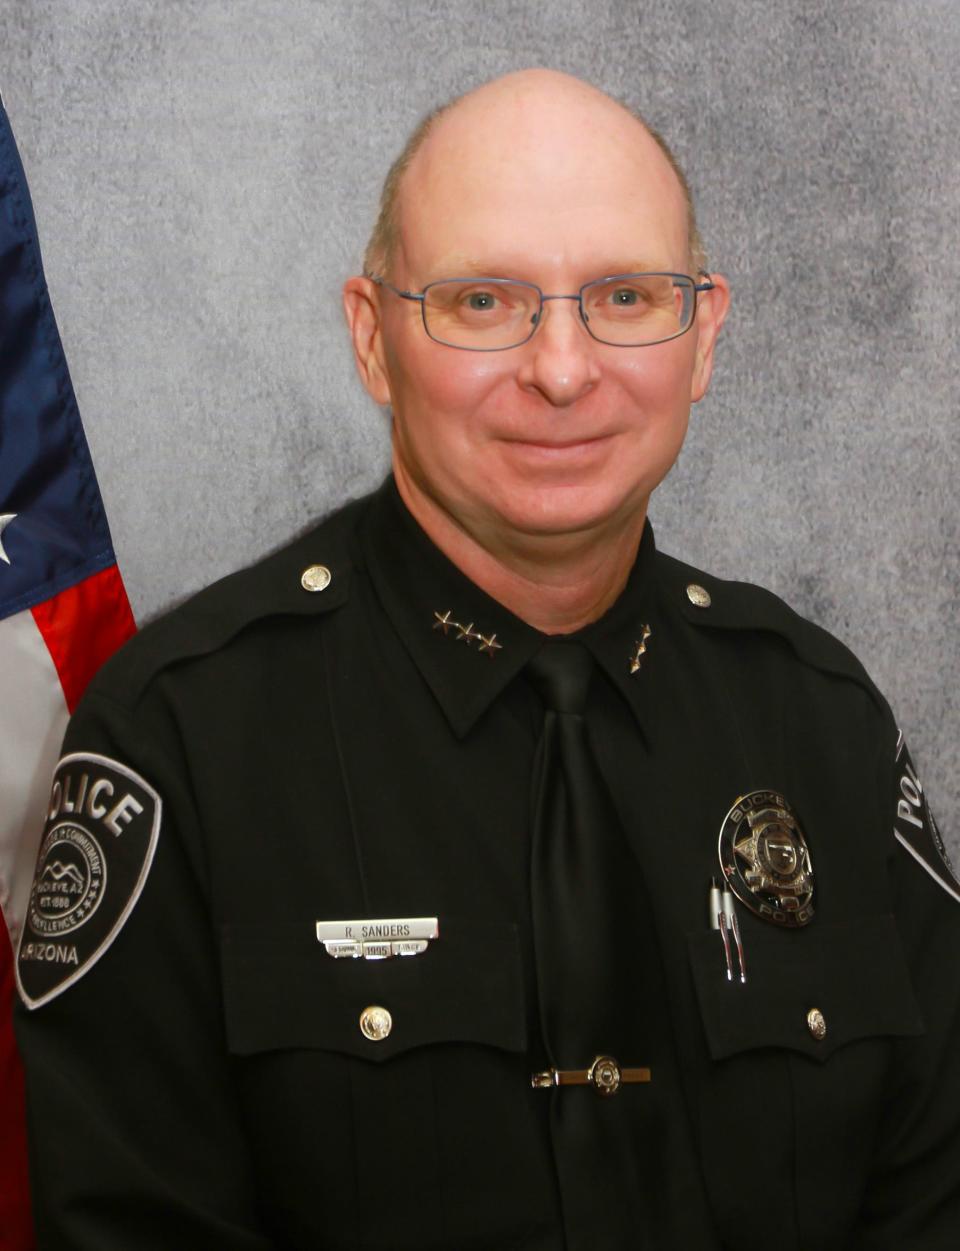 Bob Sanders has been selected as Buckeye's new police chief.